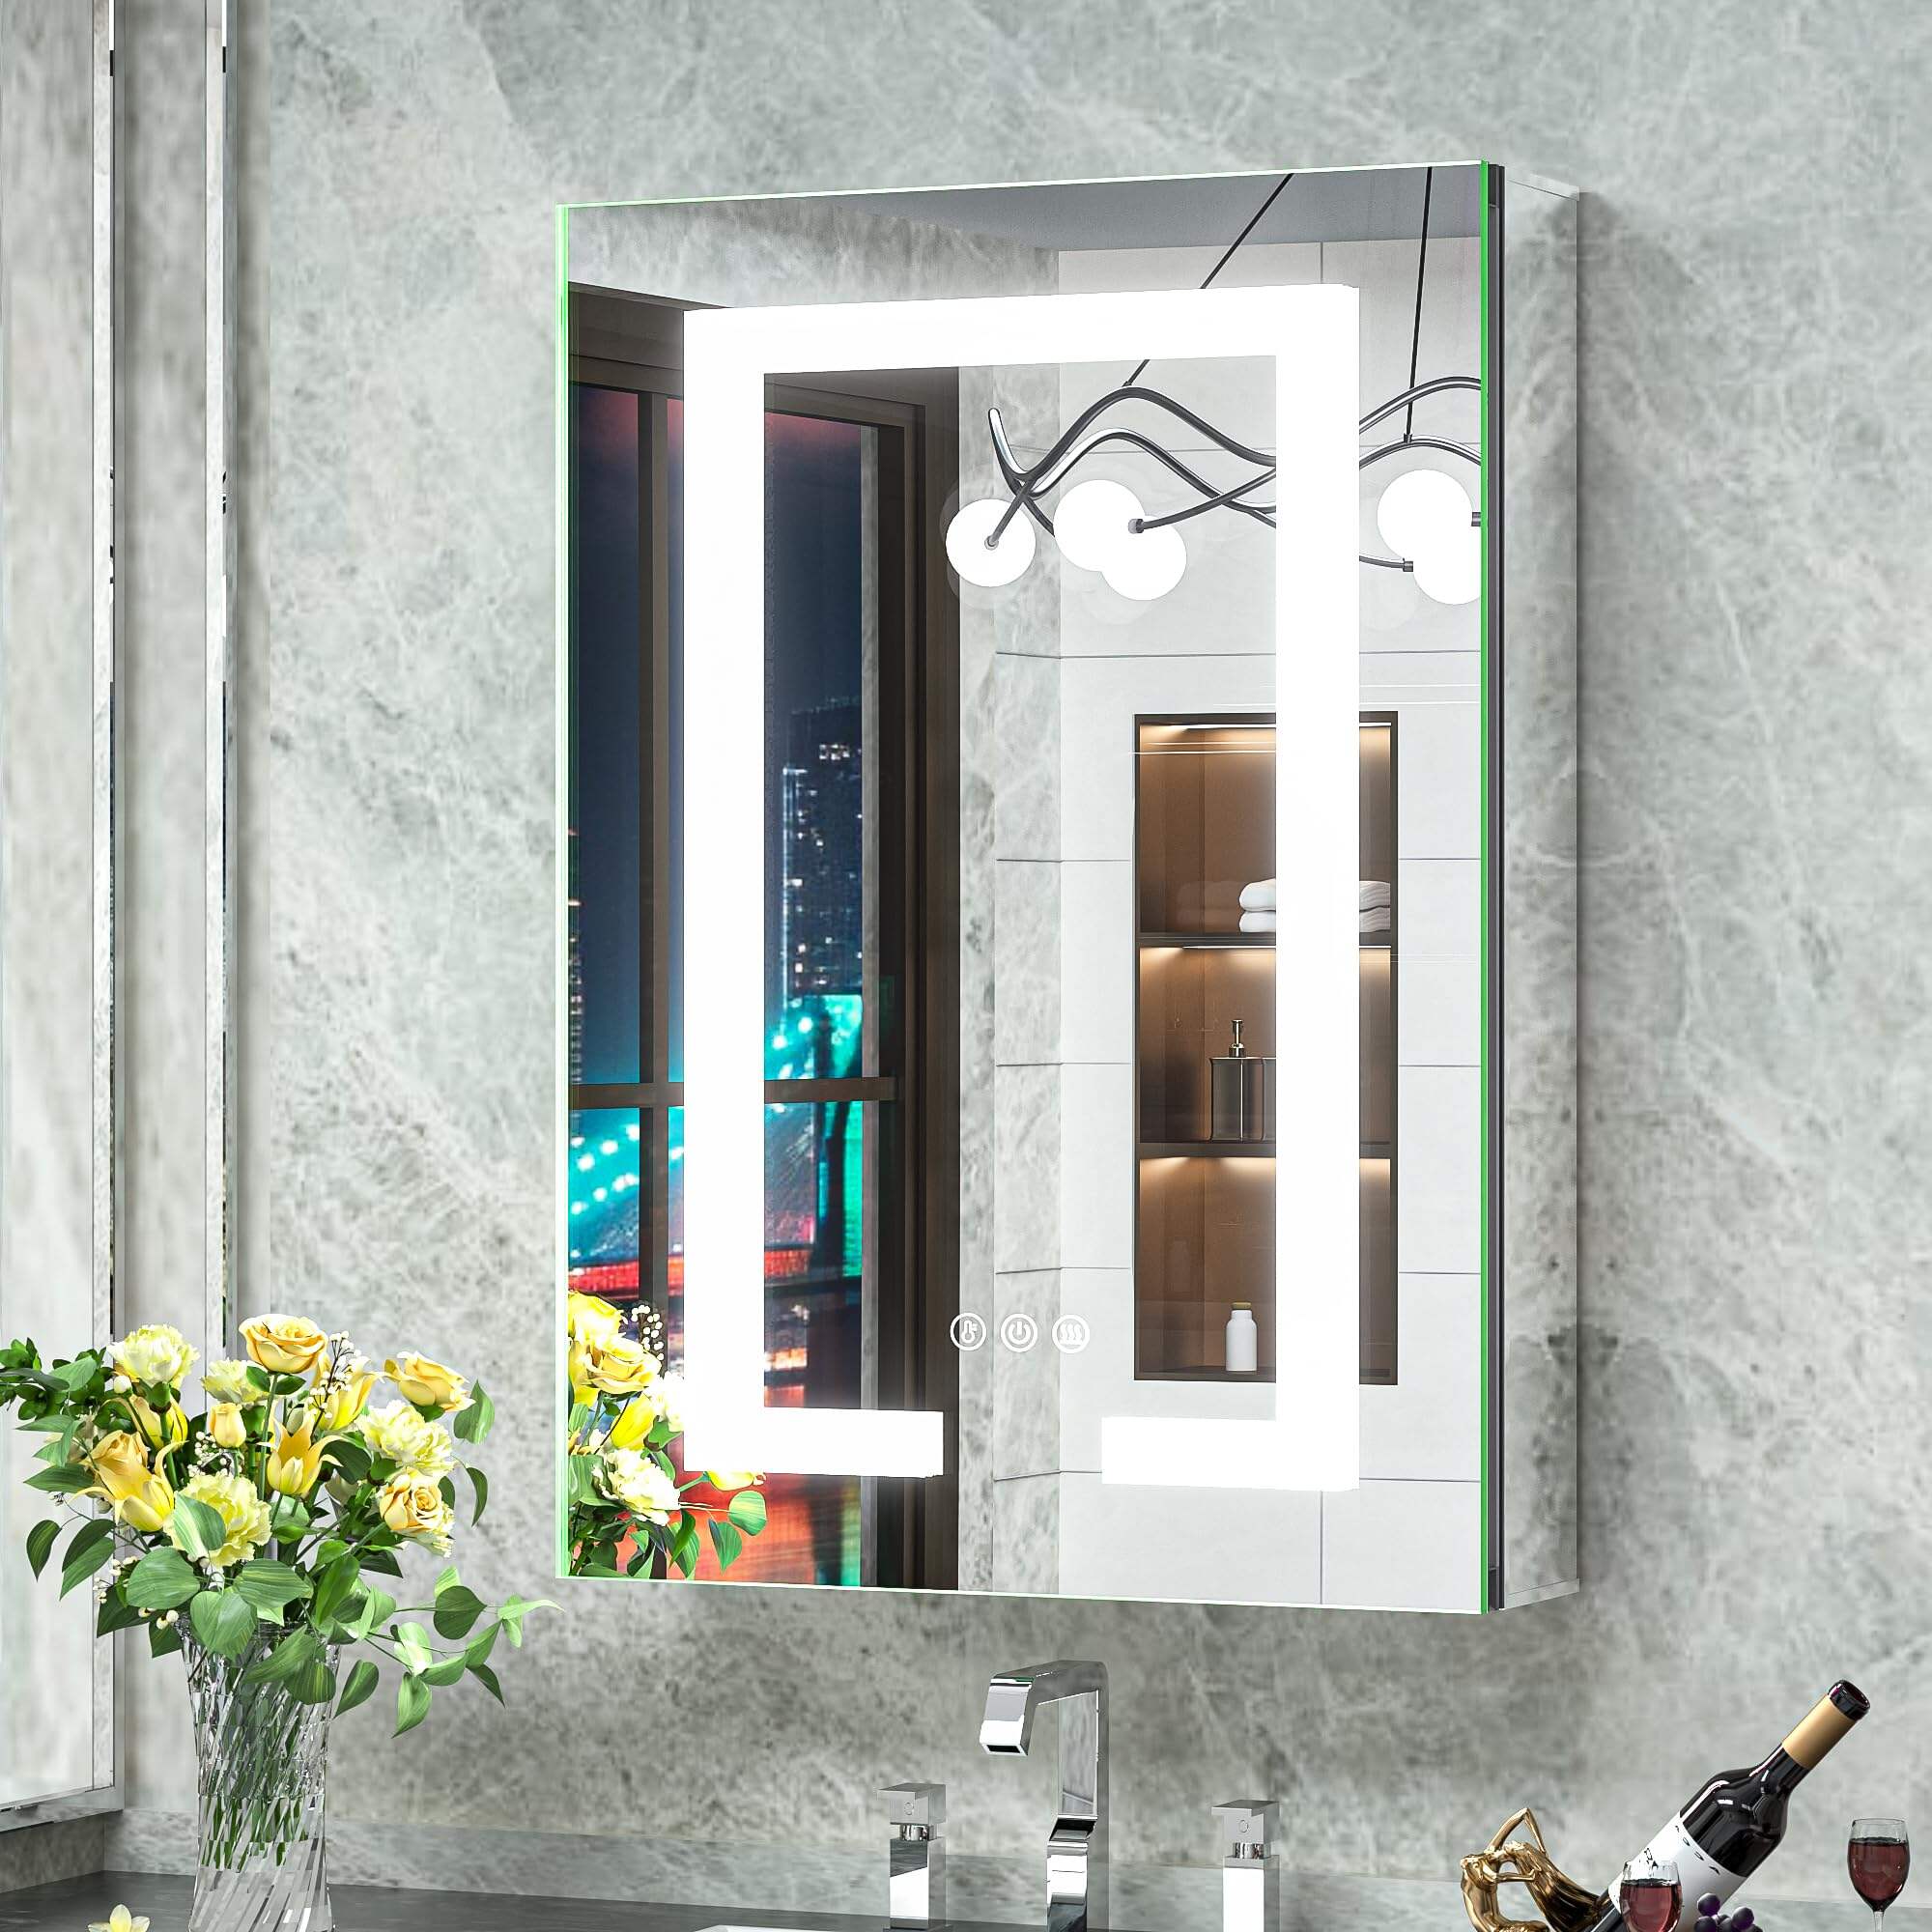 Foshan Haohan Smart Home Co., Ltd. مرآة خزانة طبية للحمام مقاس 16x24 LED مع مخرج كهربائي، إضاءة أمامية مضادة للضباب 3 ألوان سطح قابل للتعتيم لدرجة الحرارة أو حامل غائر لتخزين الحمام والحديث